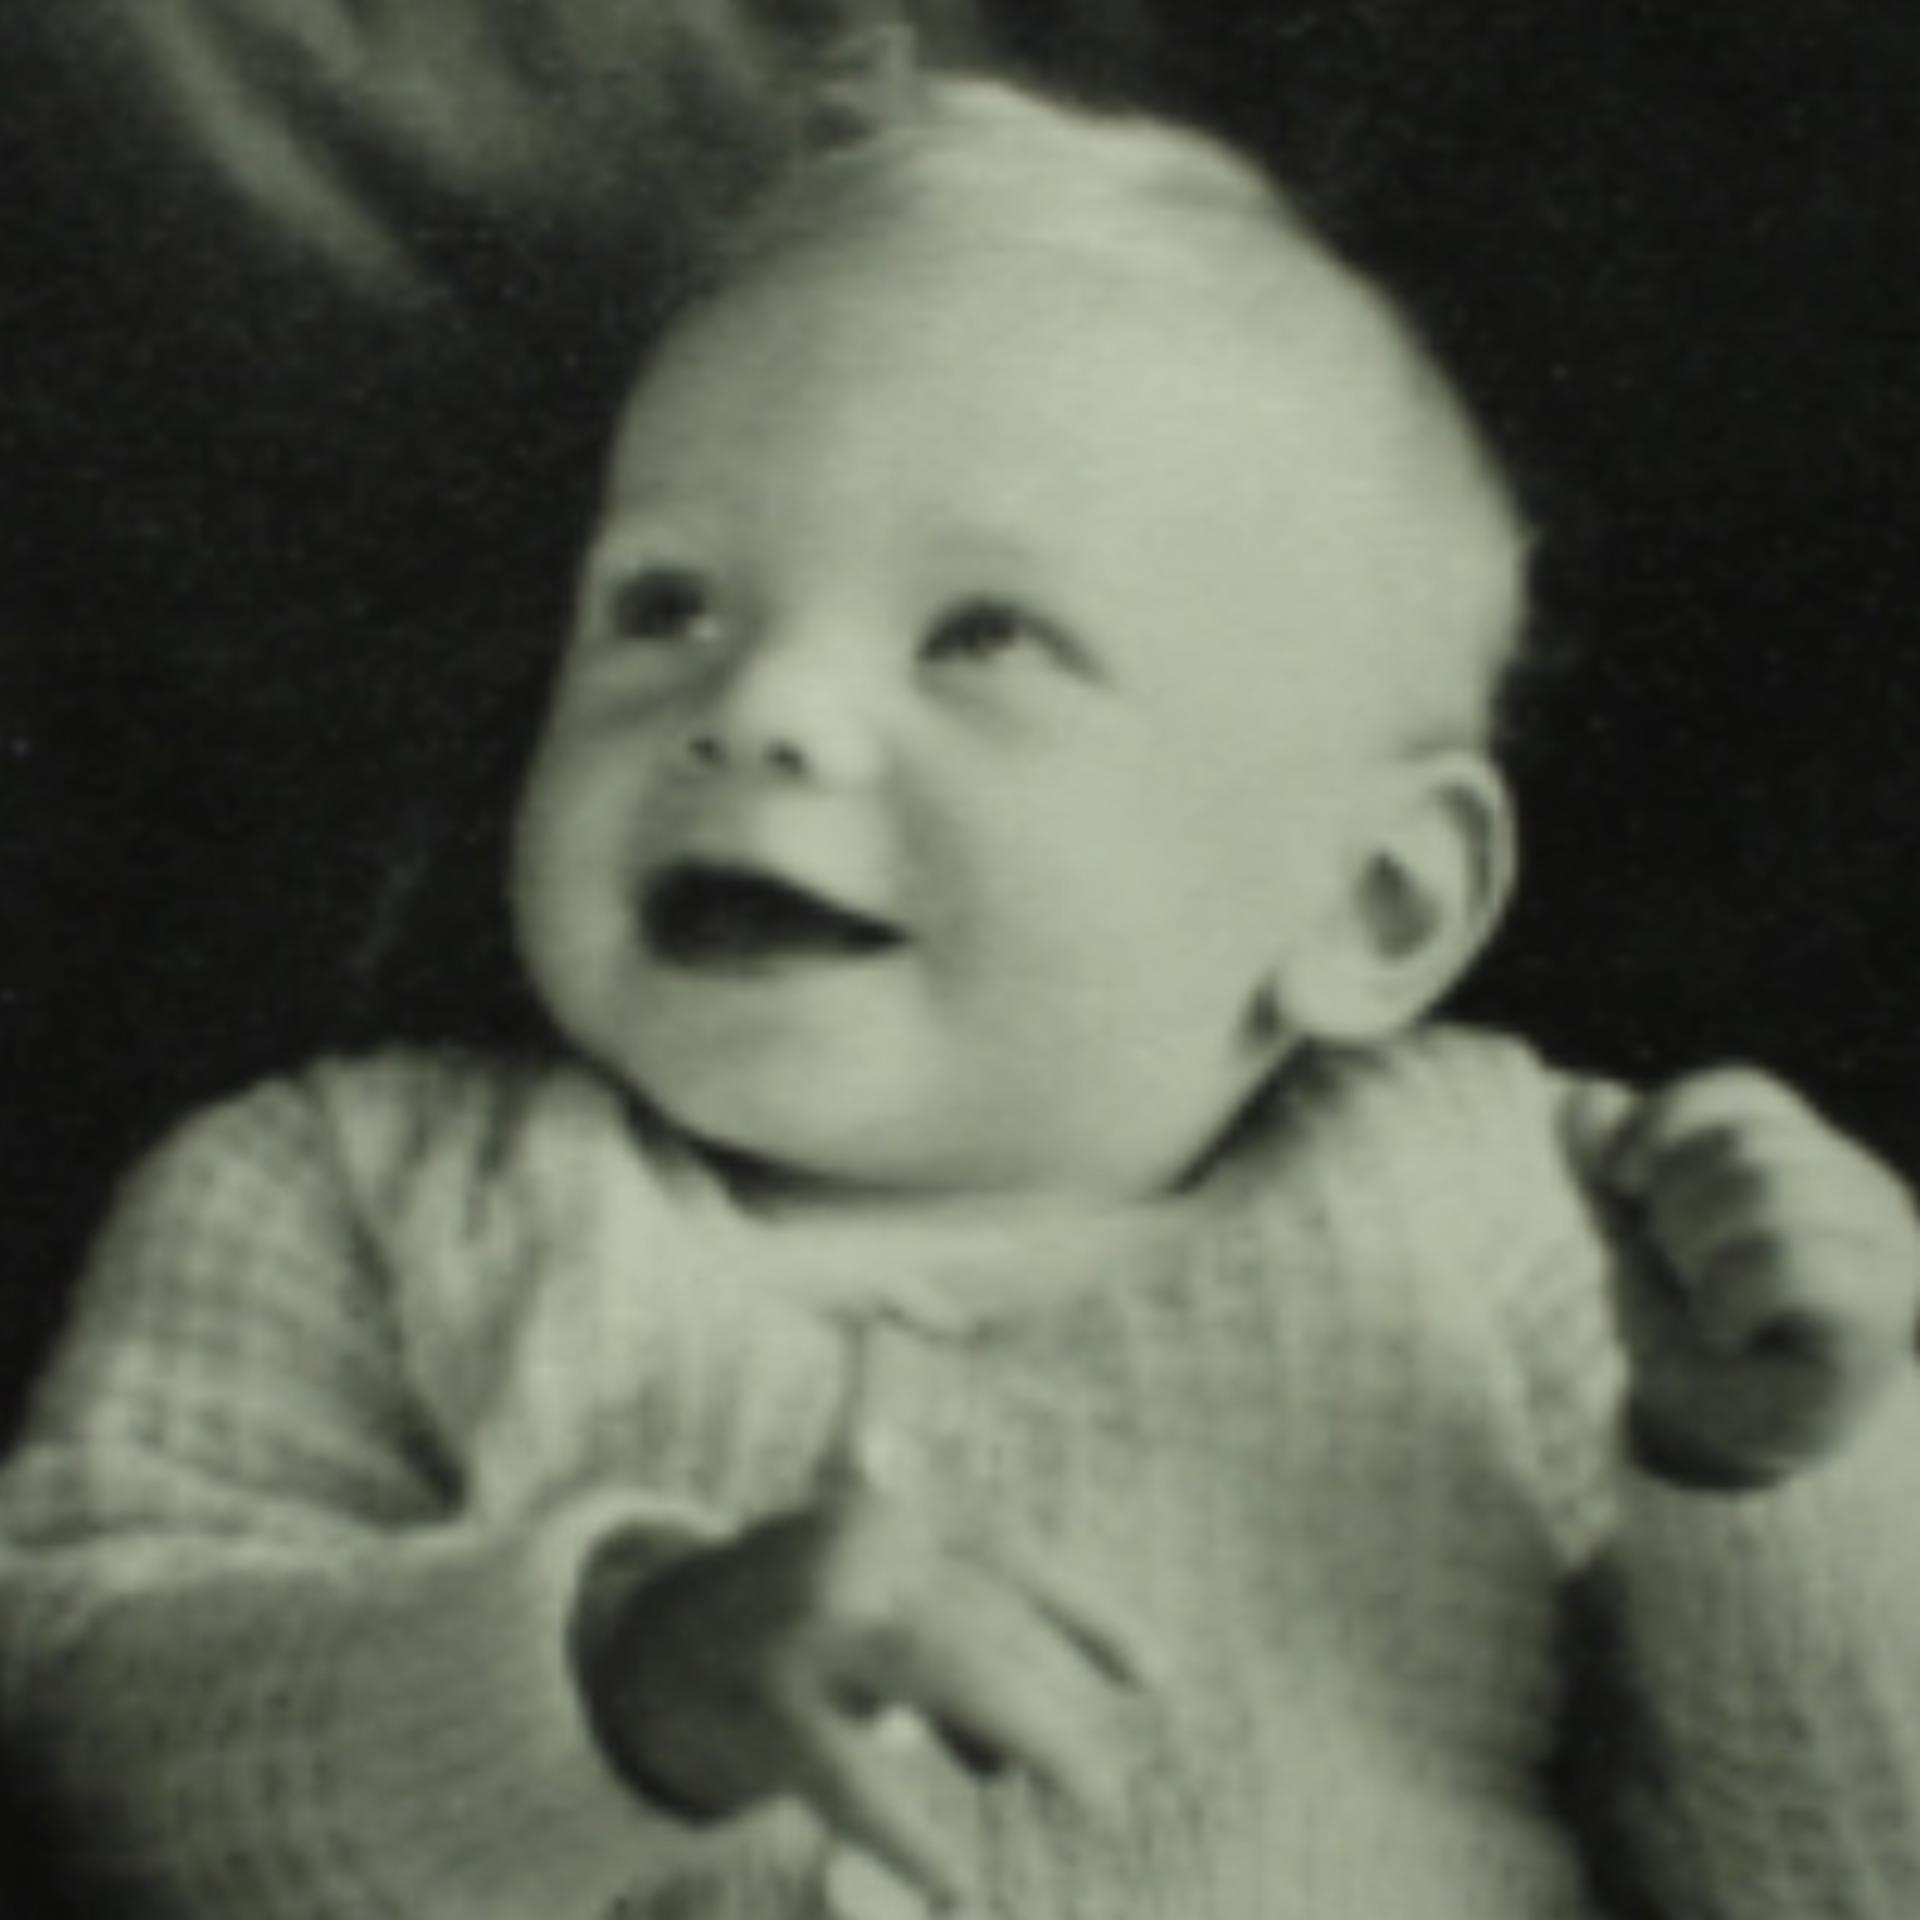 An infant James Dyson smiling